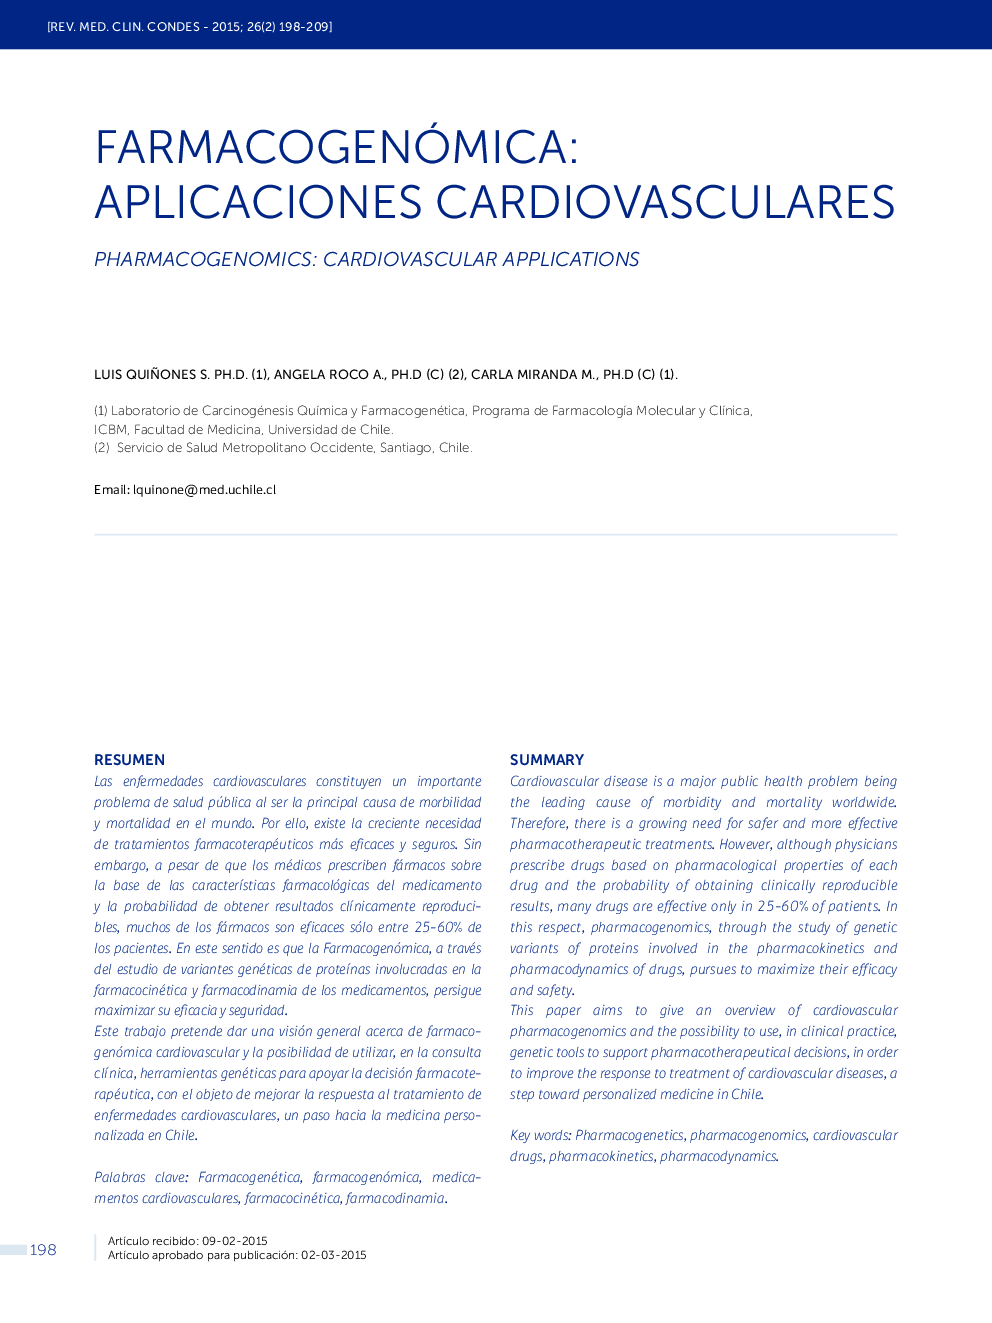 Farmacogenómica: Aplicaciones cardiovasculares